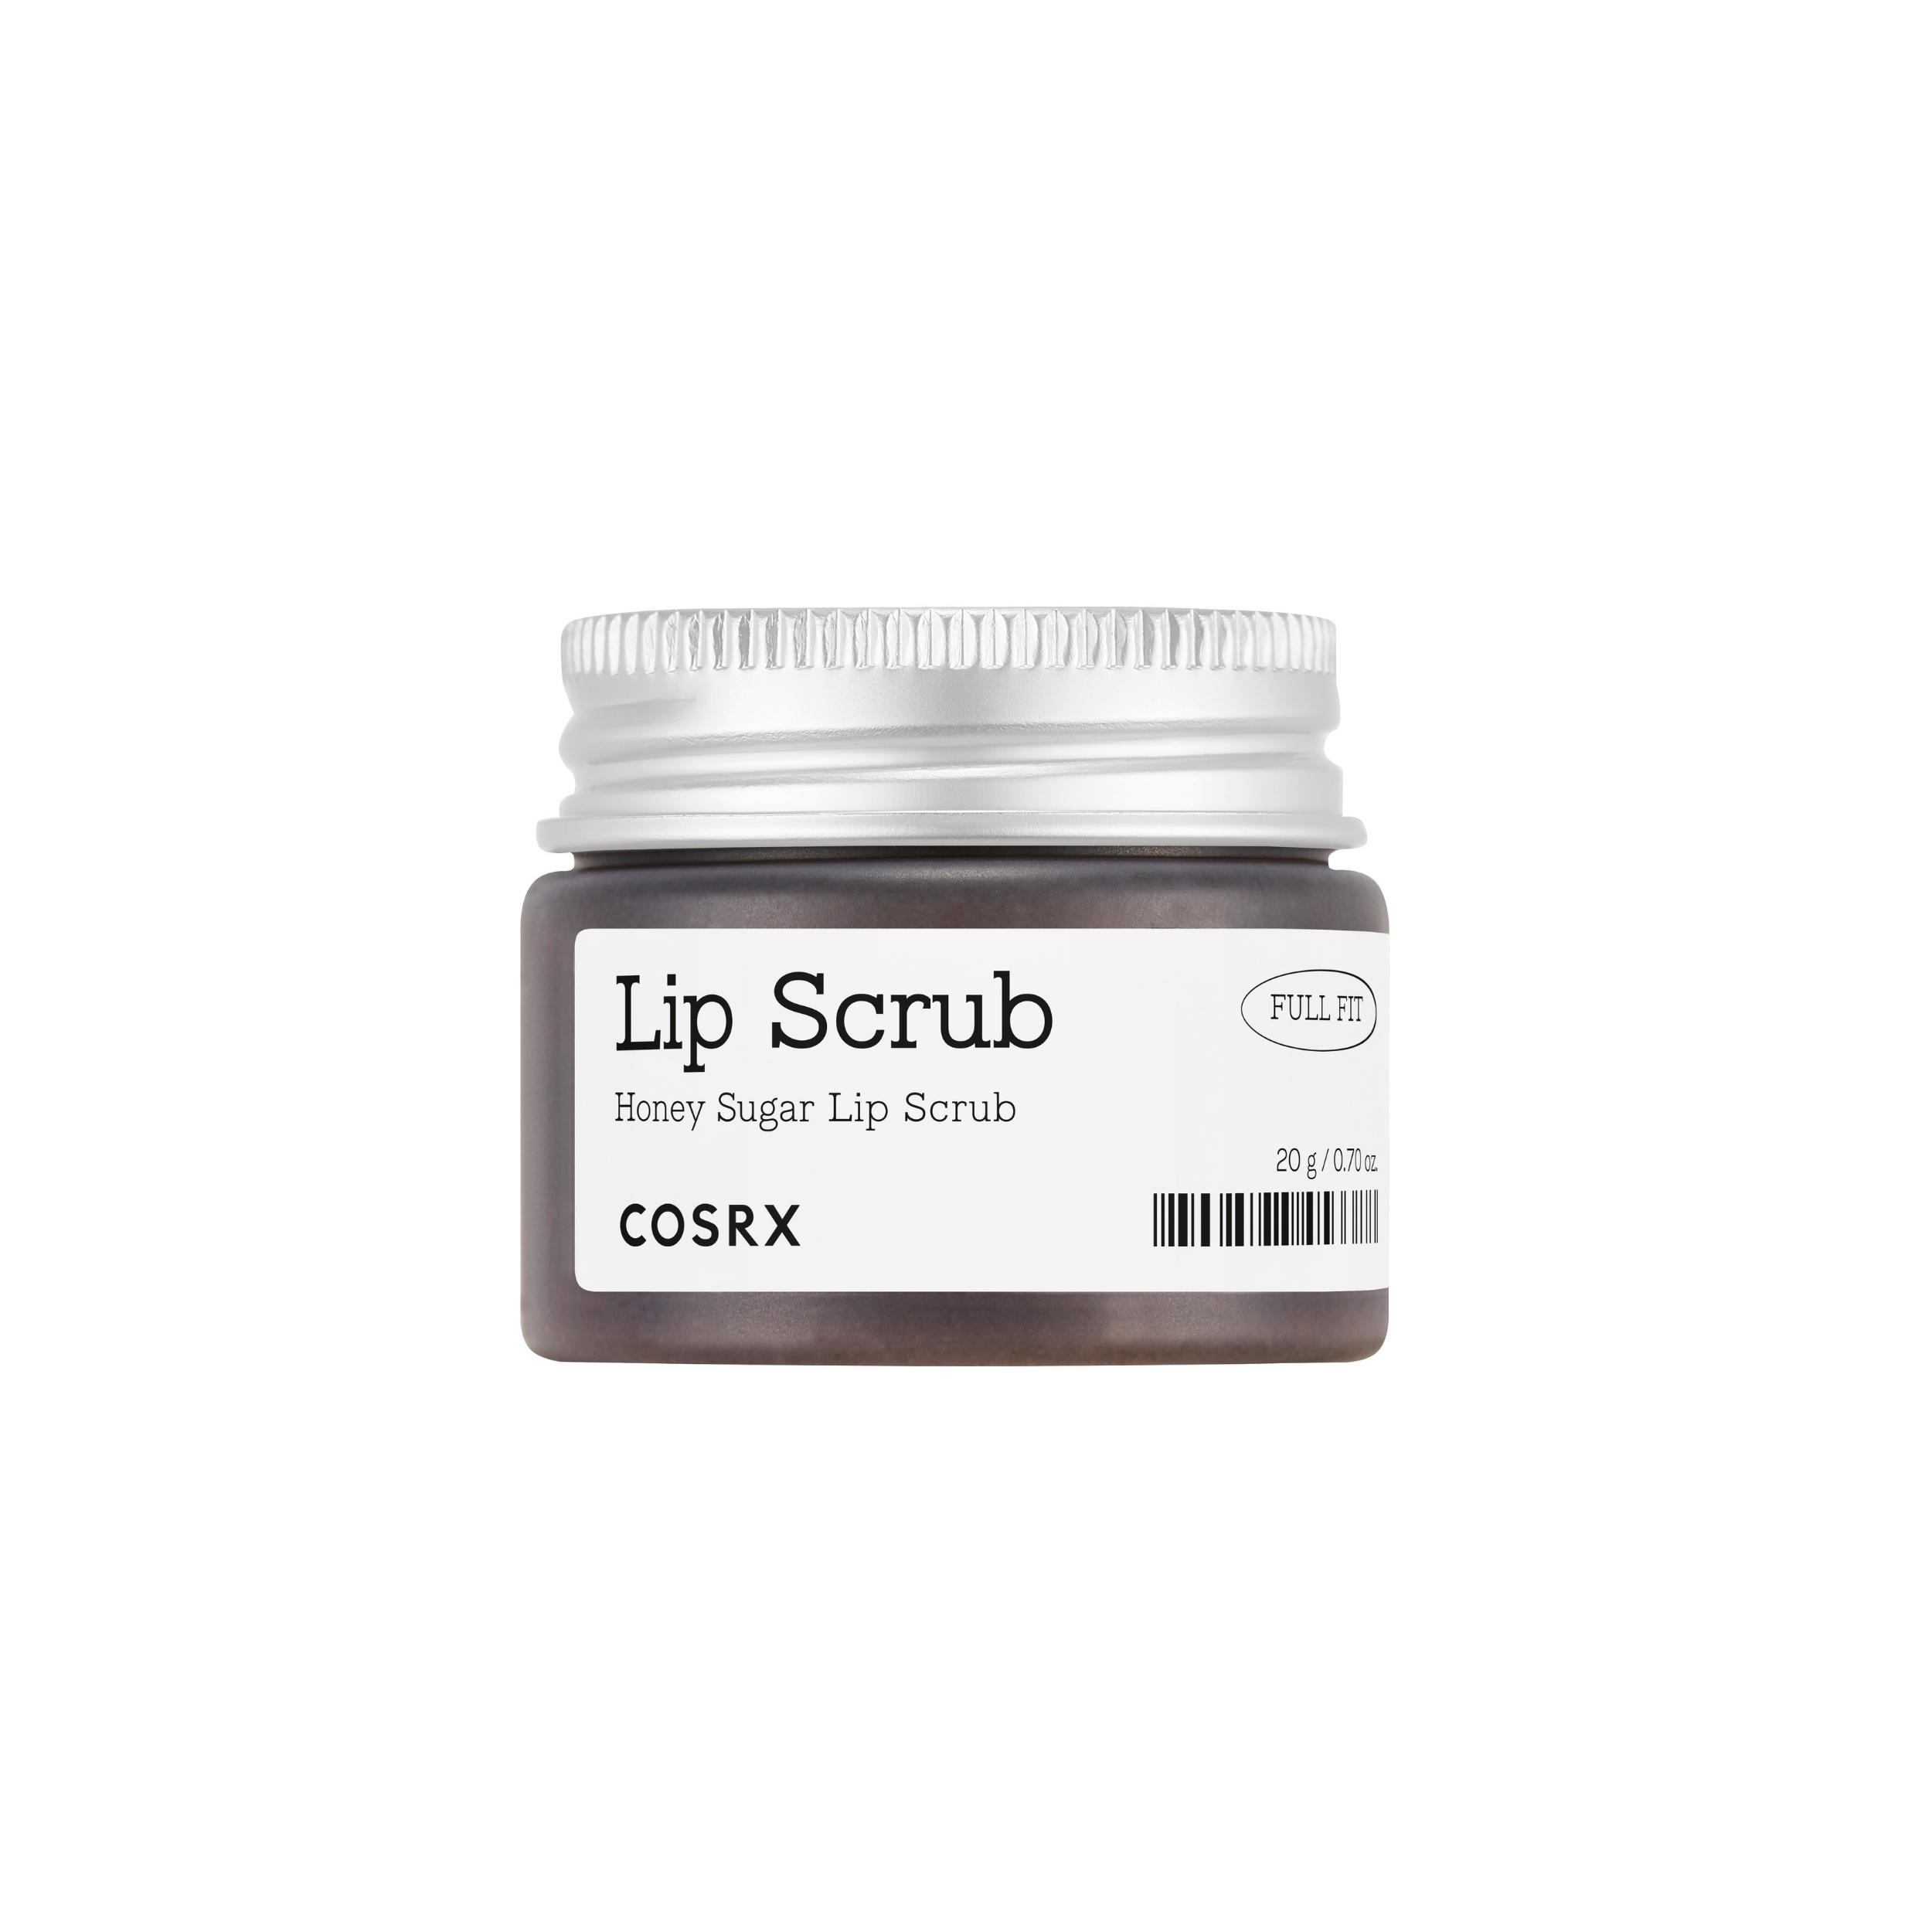 COSRX Full Fit Honey Sugar Lip Scrub, 20 gram